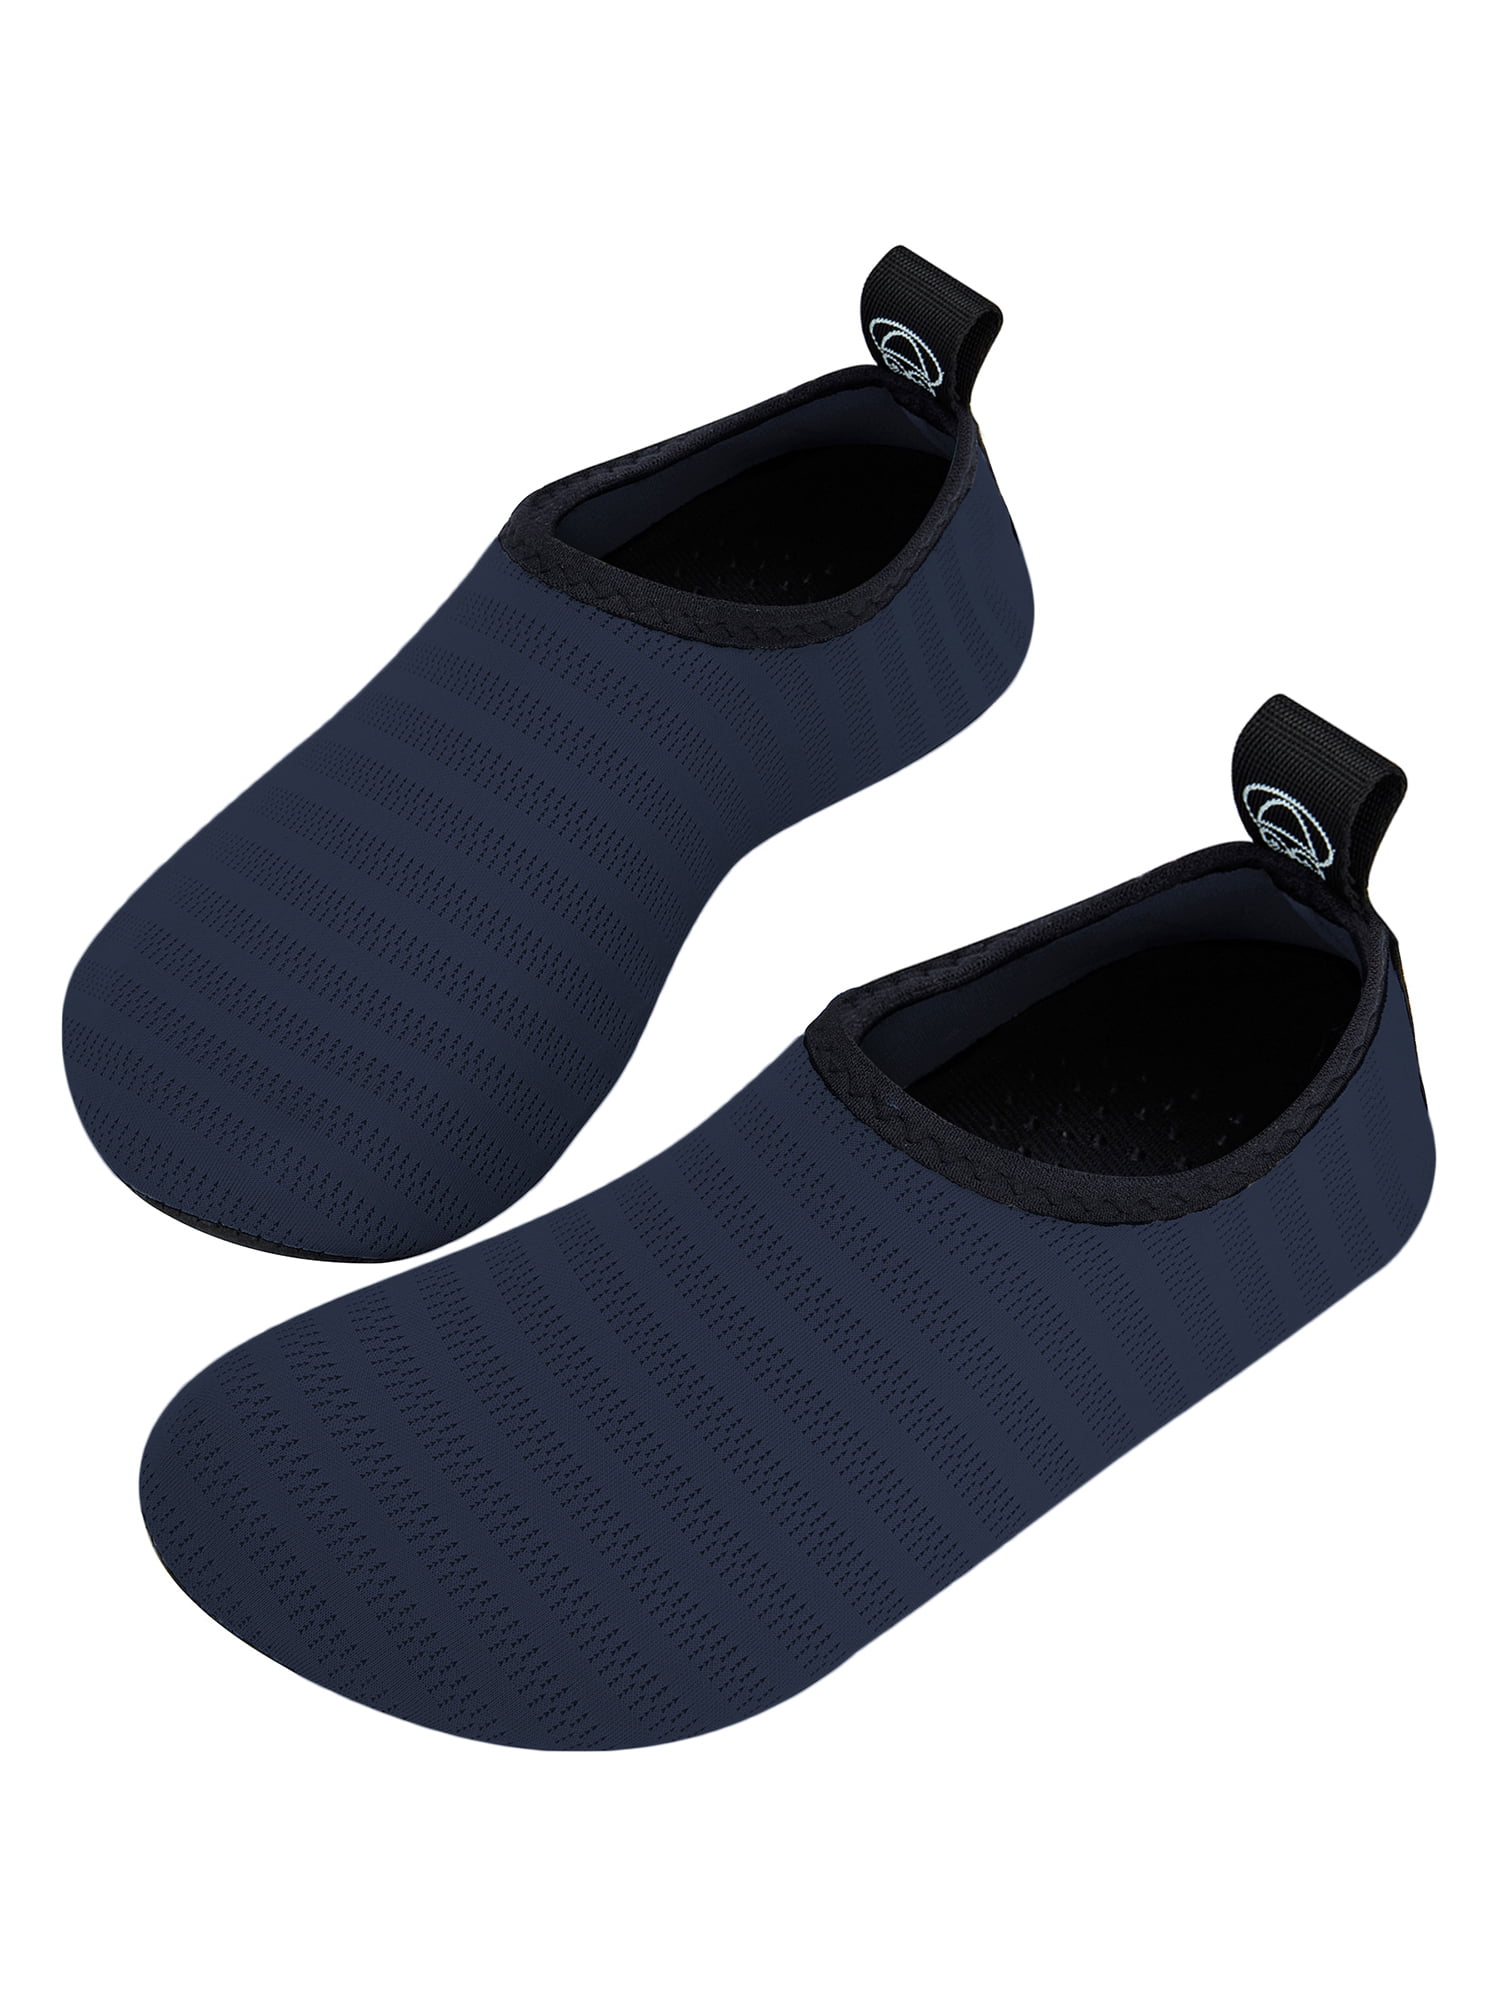 Womens Water Shoes Barefoot Aqua Socks Quick-Dry Beach Swim Gym Sports Exercise 